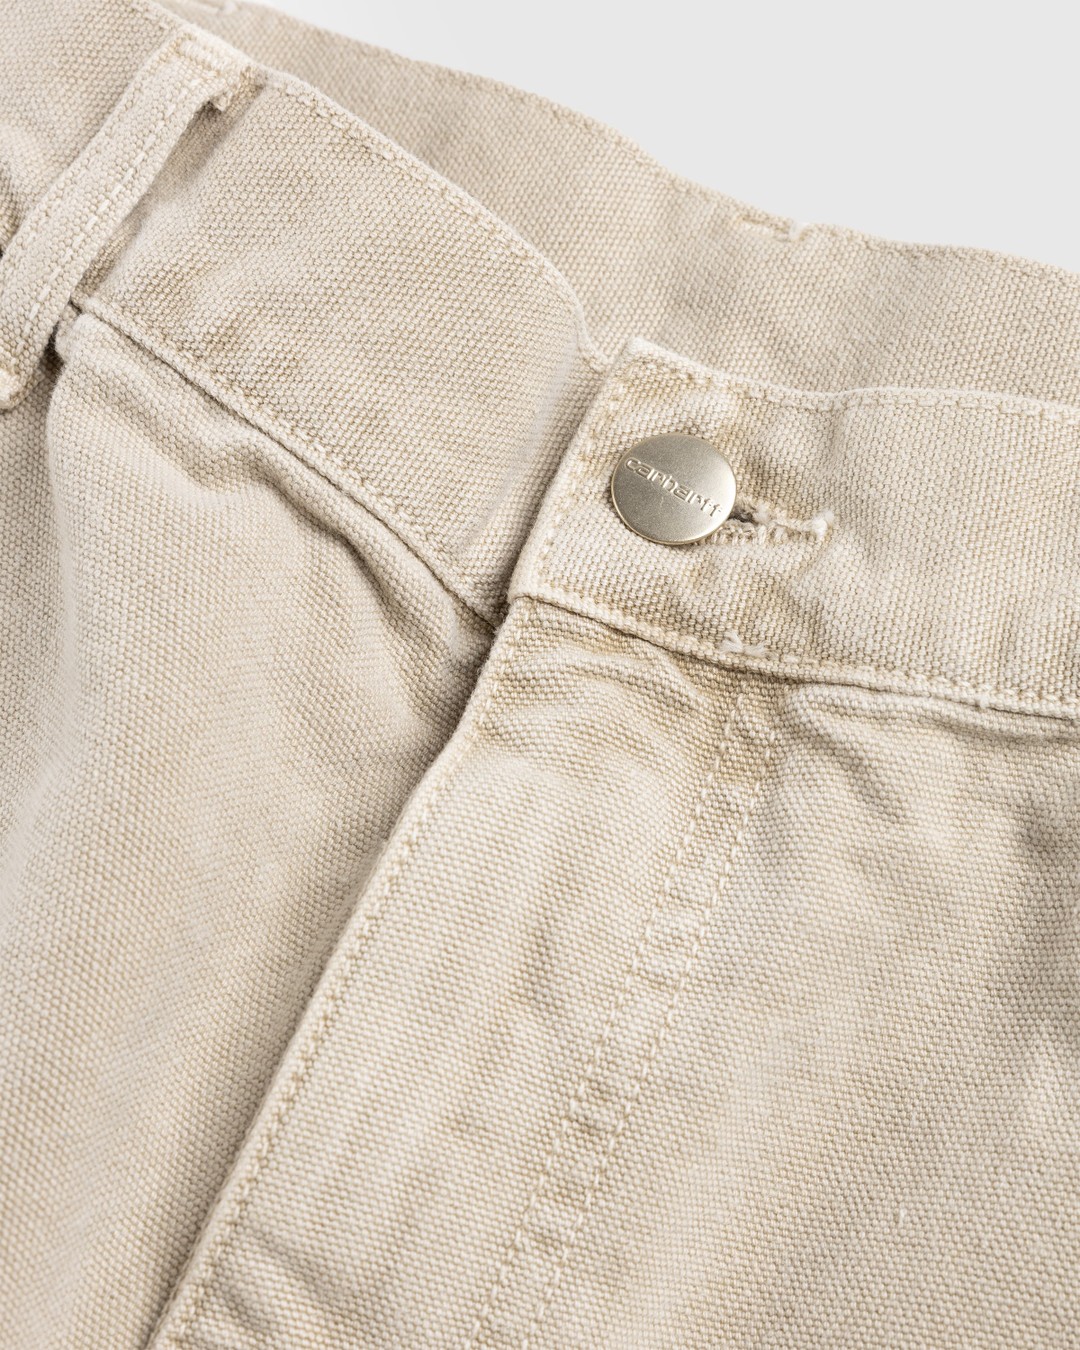 Carhartt WIP – Double Knee Short Brown - Shorts - Brown - Image 5